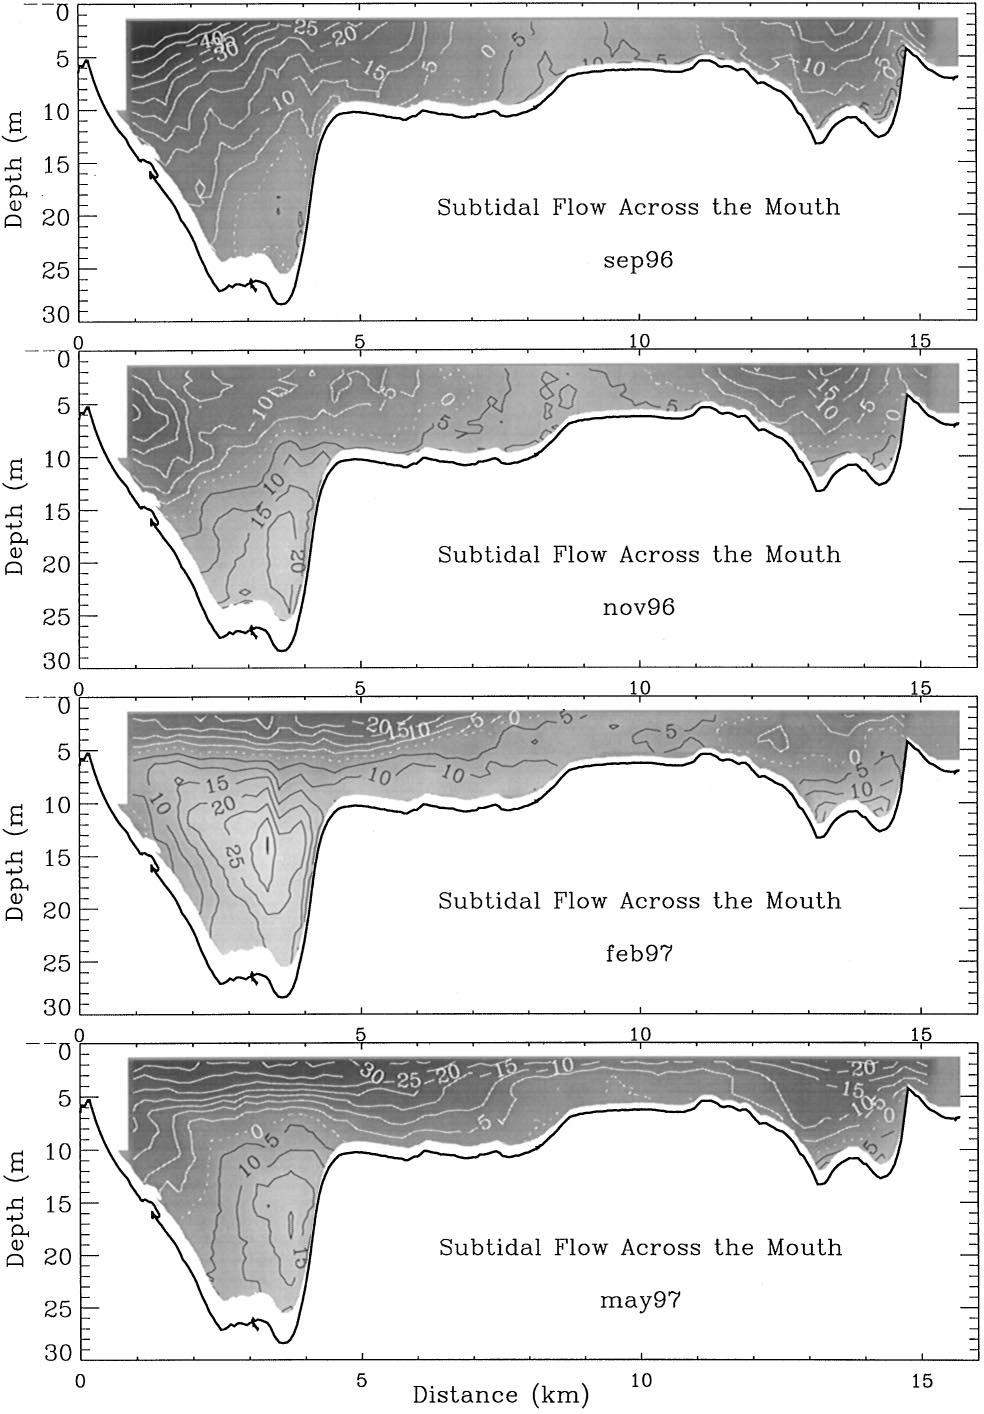 1170 A. Valle Levinson et al./continental Shelf Research 18 (1998) 1157 1177 Fig. 6.